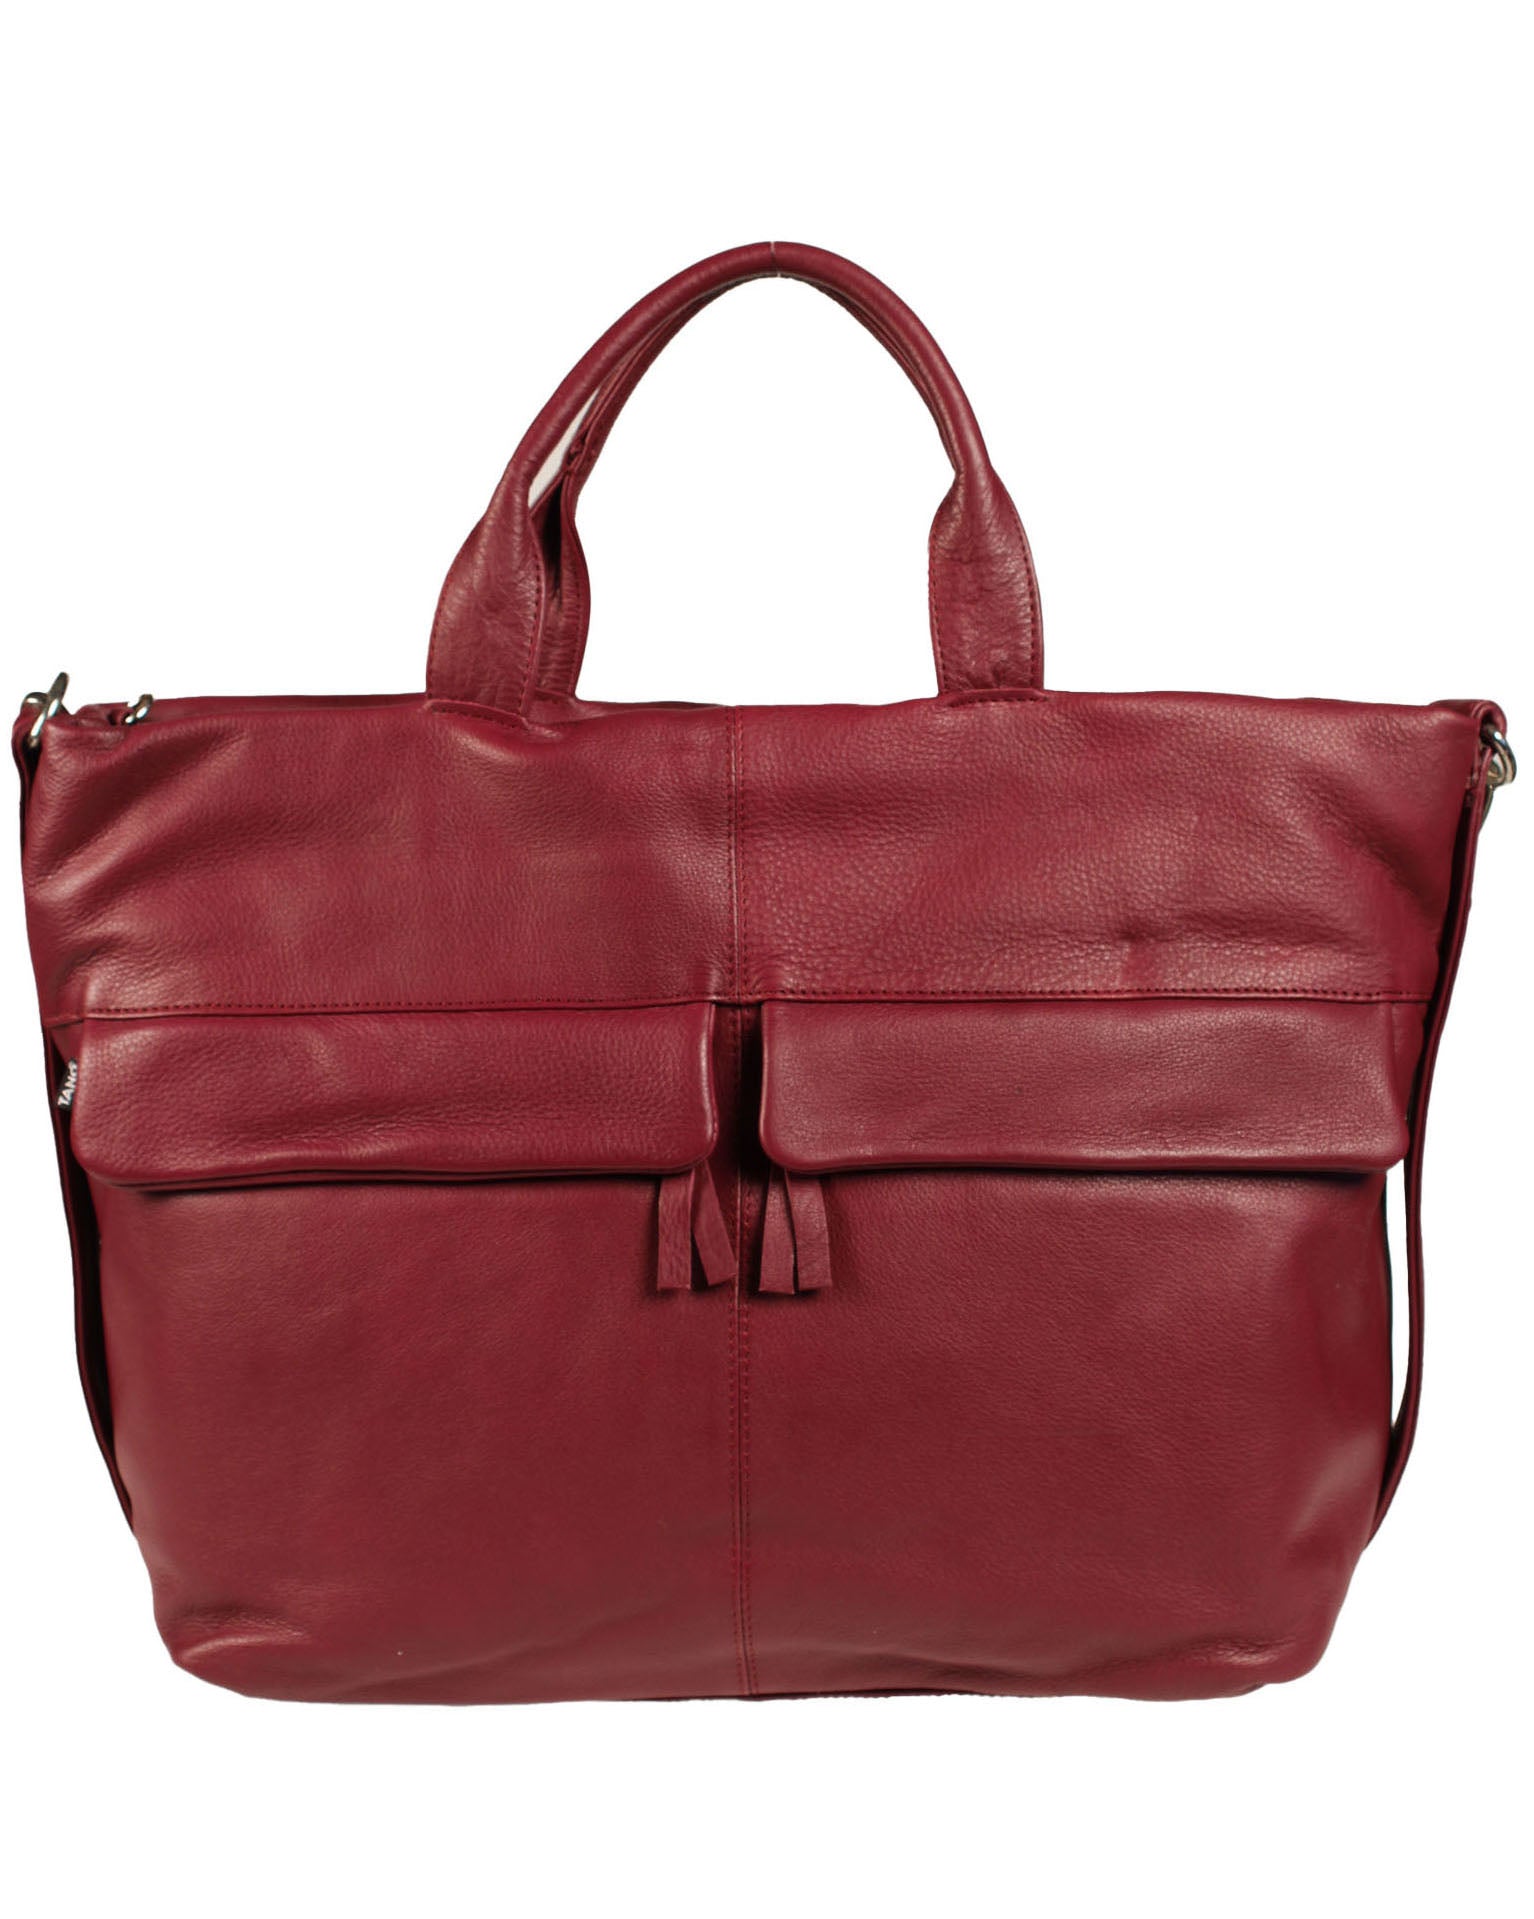 Tano | Bags | Tano Sage Green Leather Cross Body Bag | Poshmark